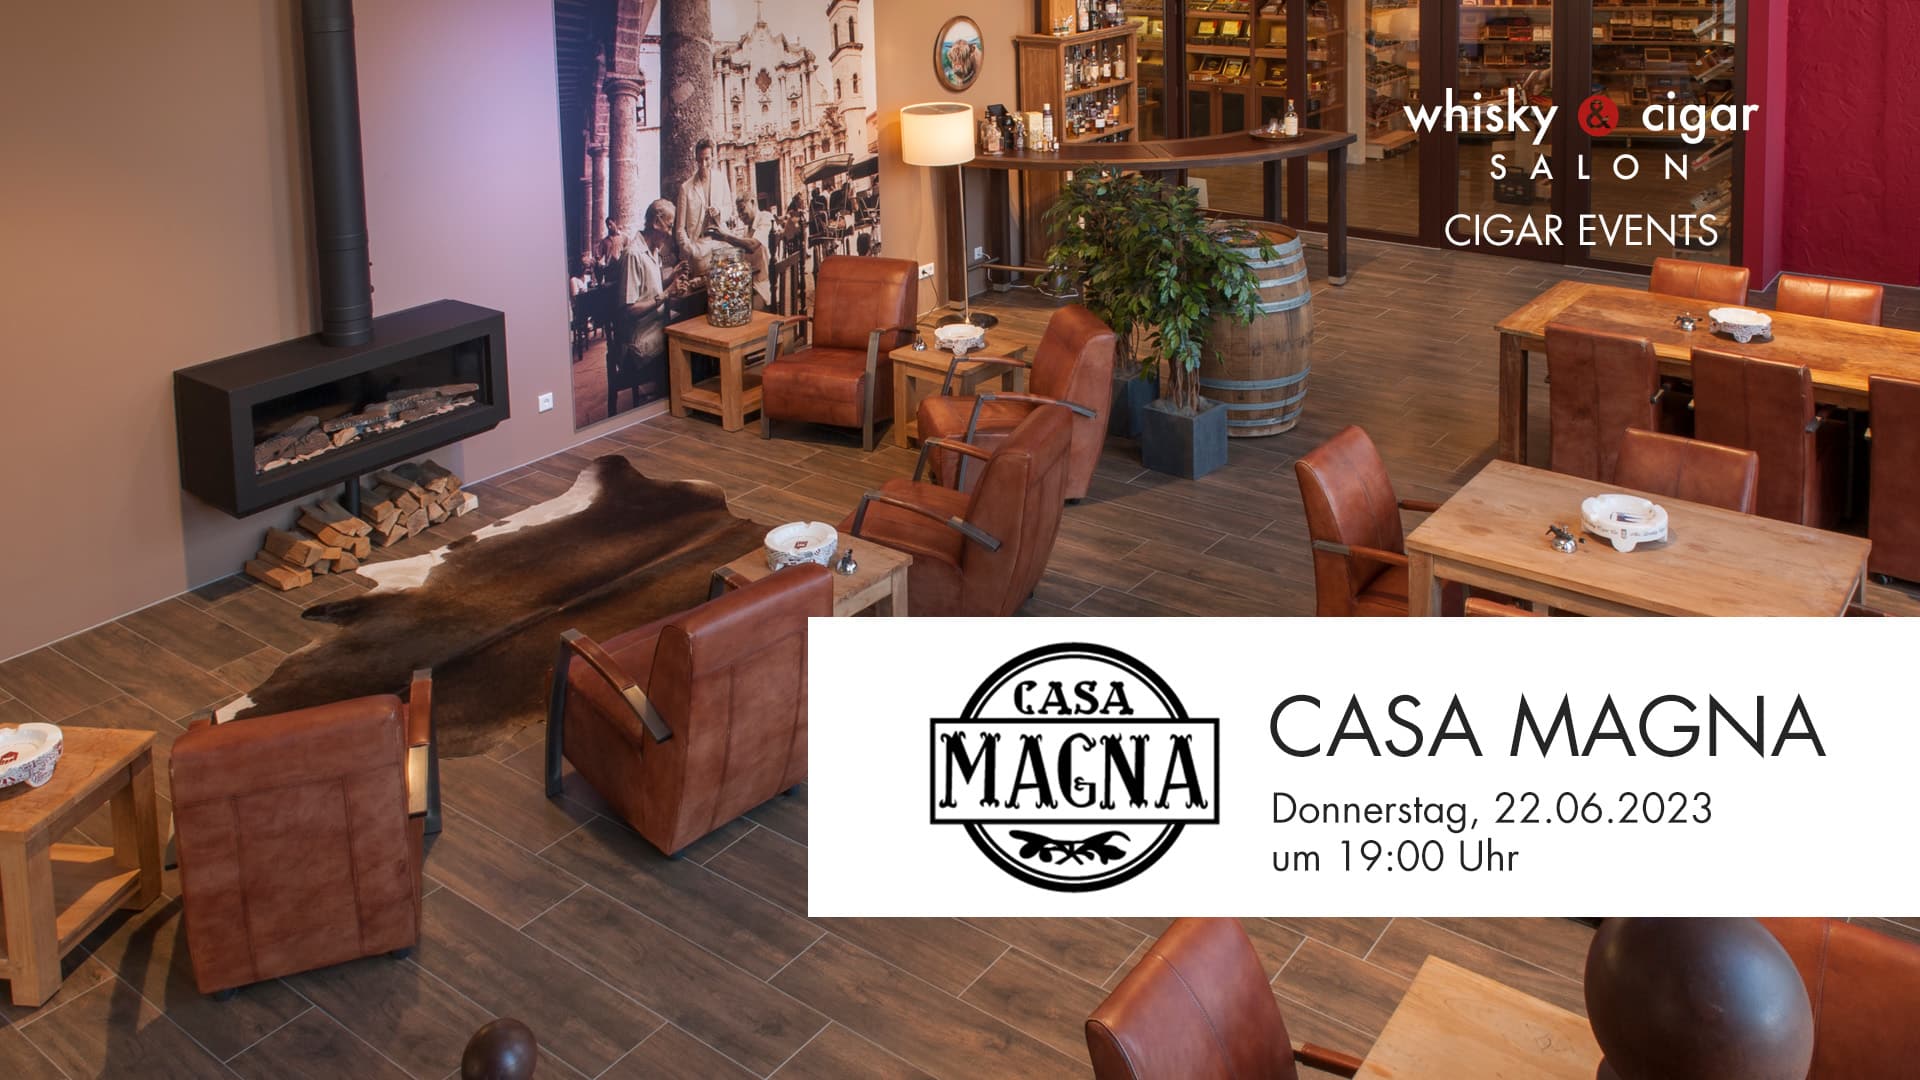 Zigarren-Event Casa Magna Cigars im whisky & cigar salon.